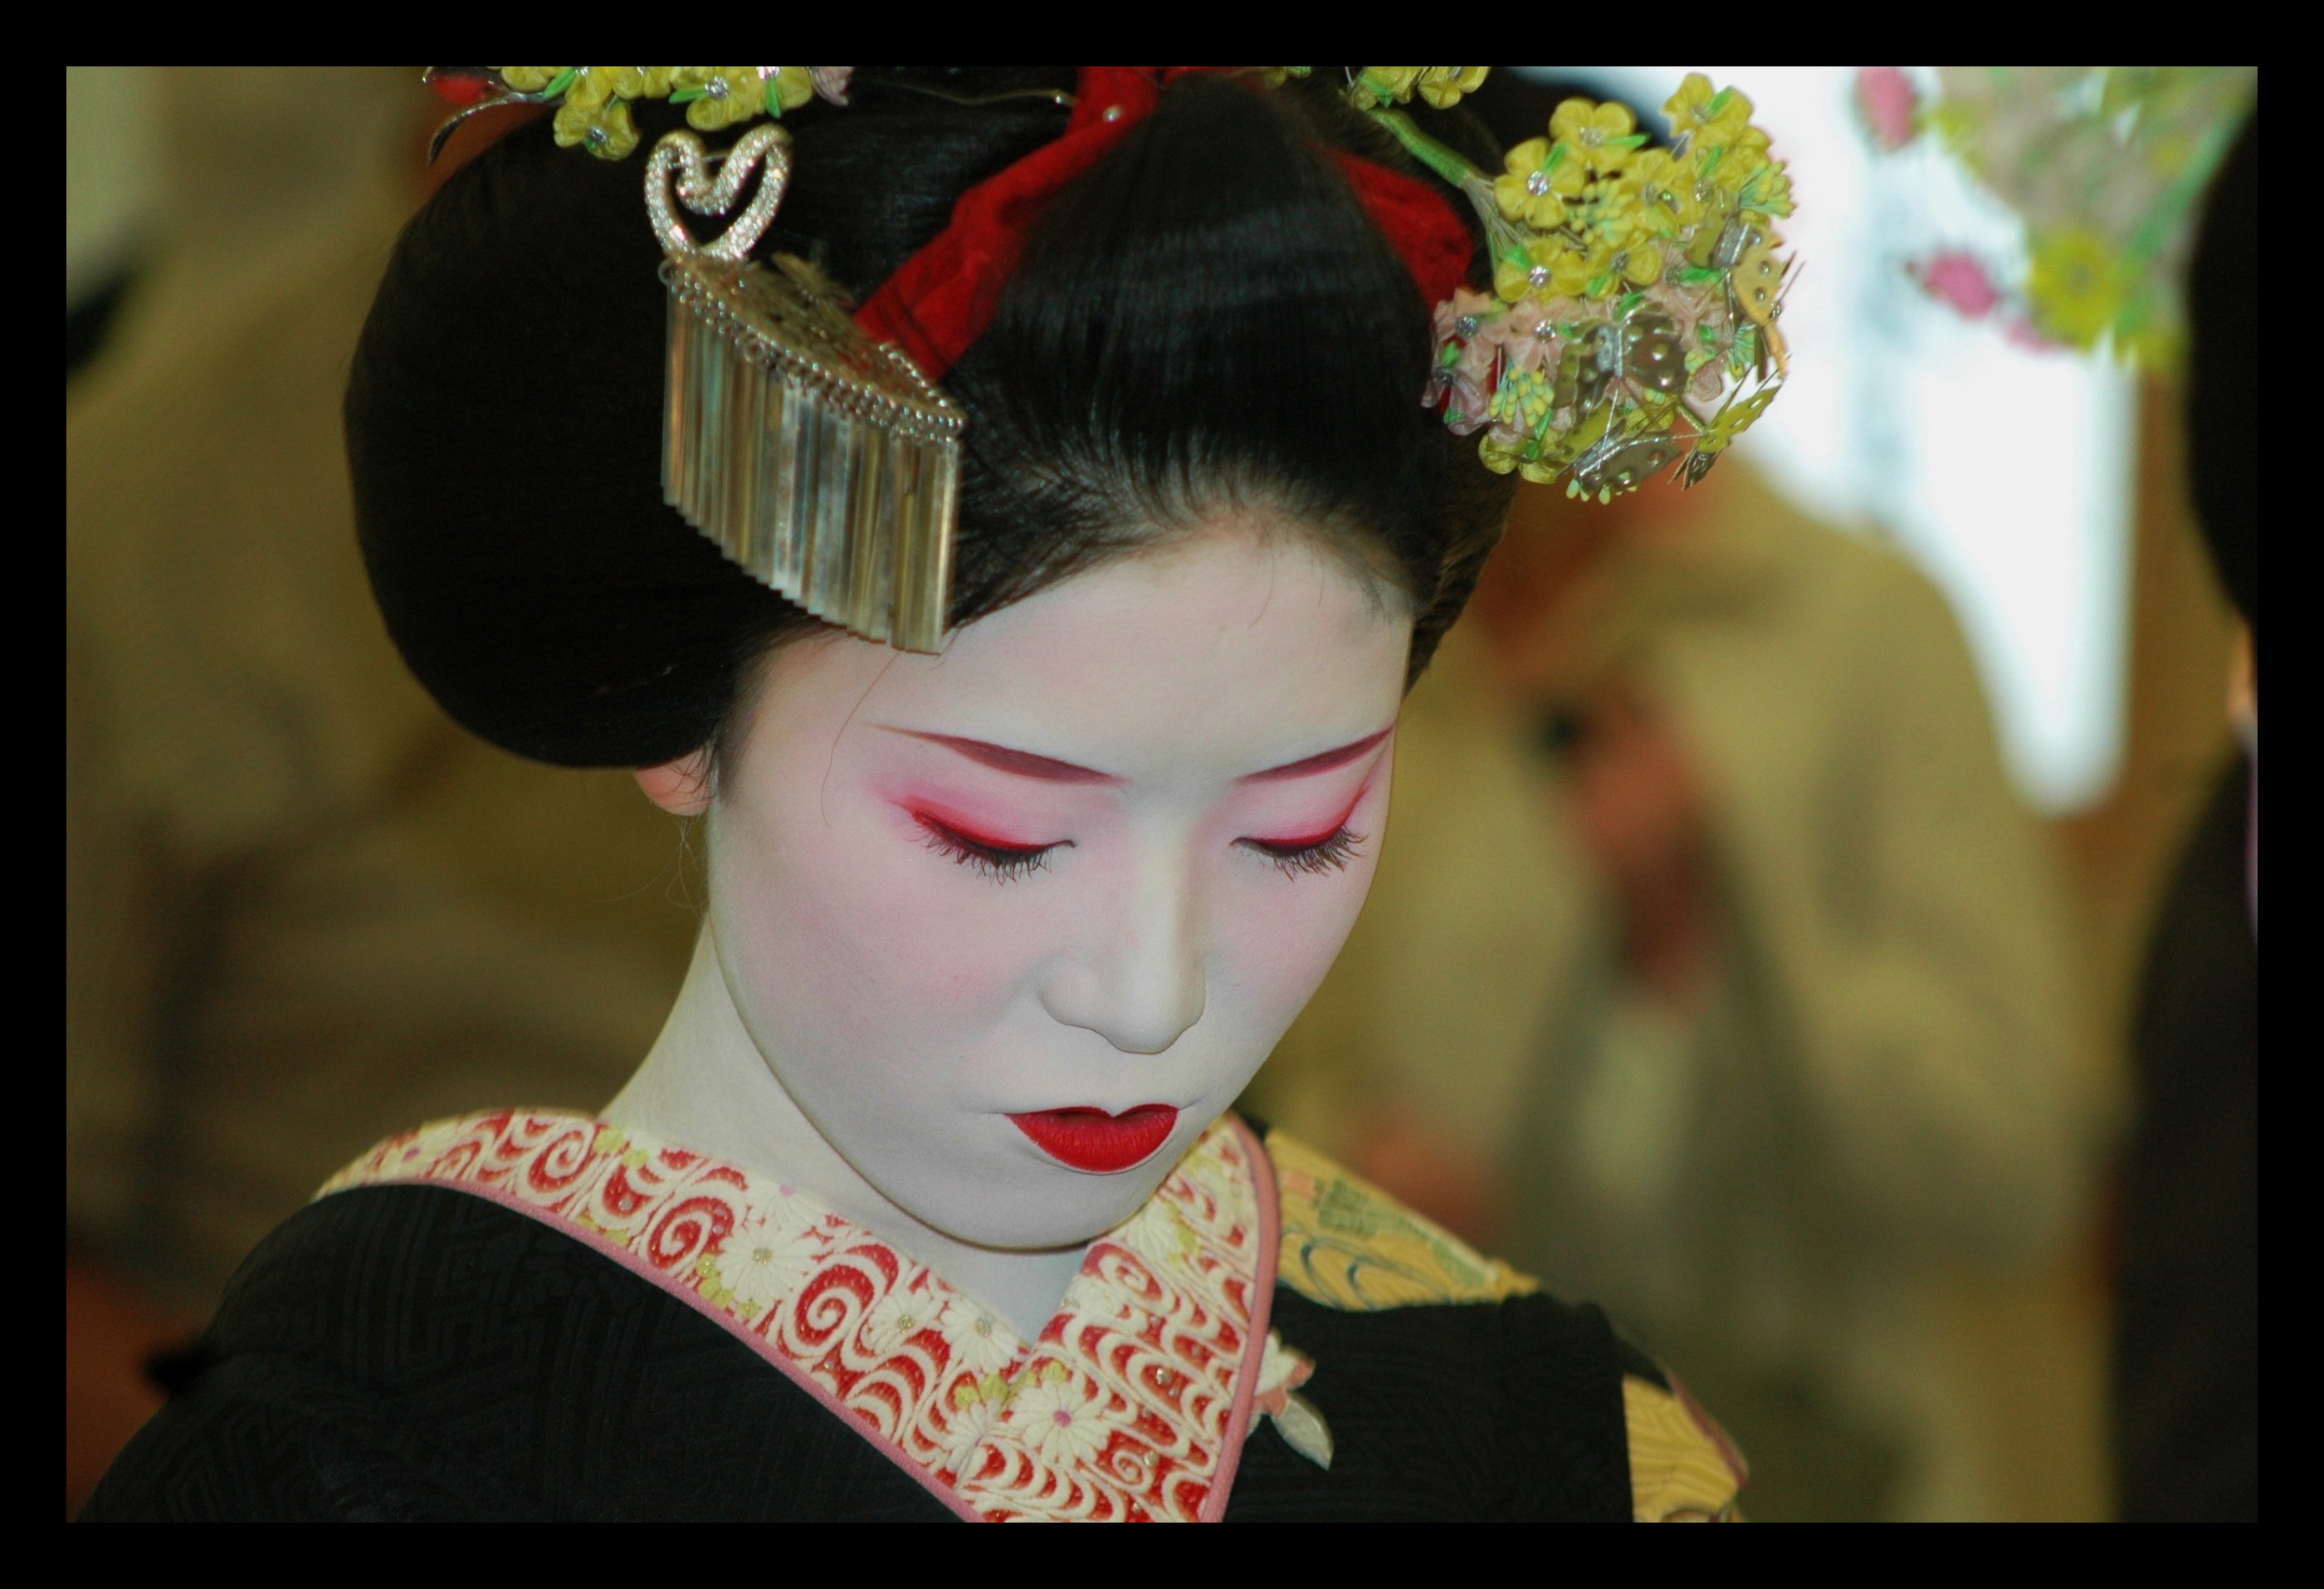 "Sad Geisha" by Robertwillem2 Flick'r Page (2800 x 1914 - 477 KB)